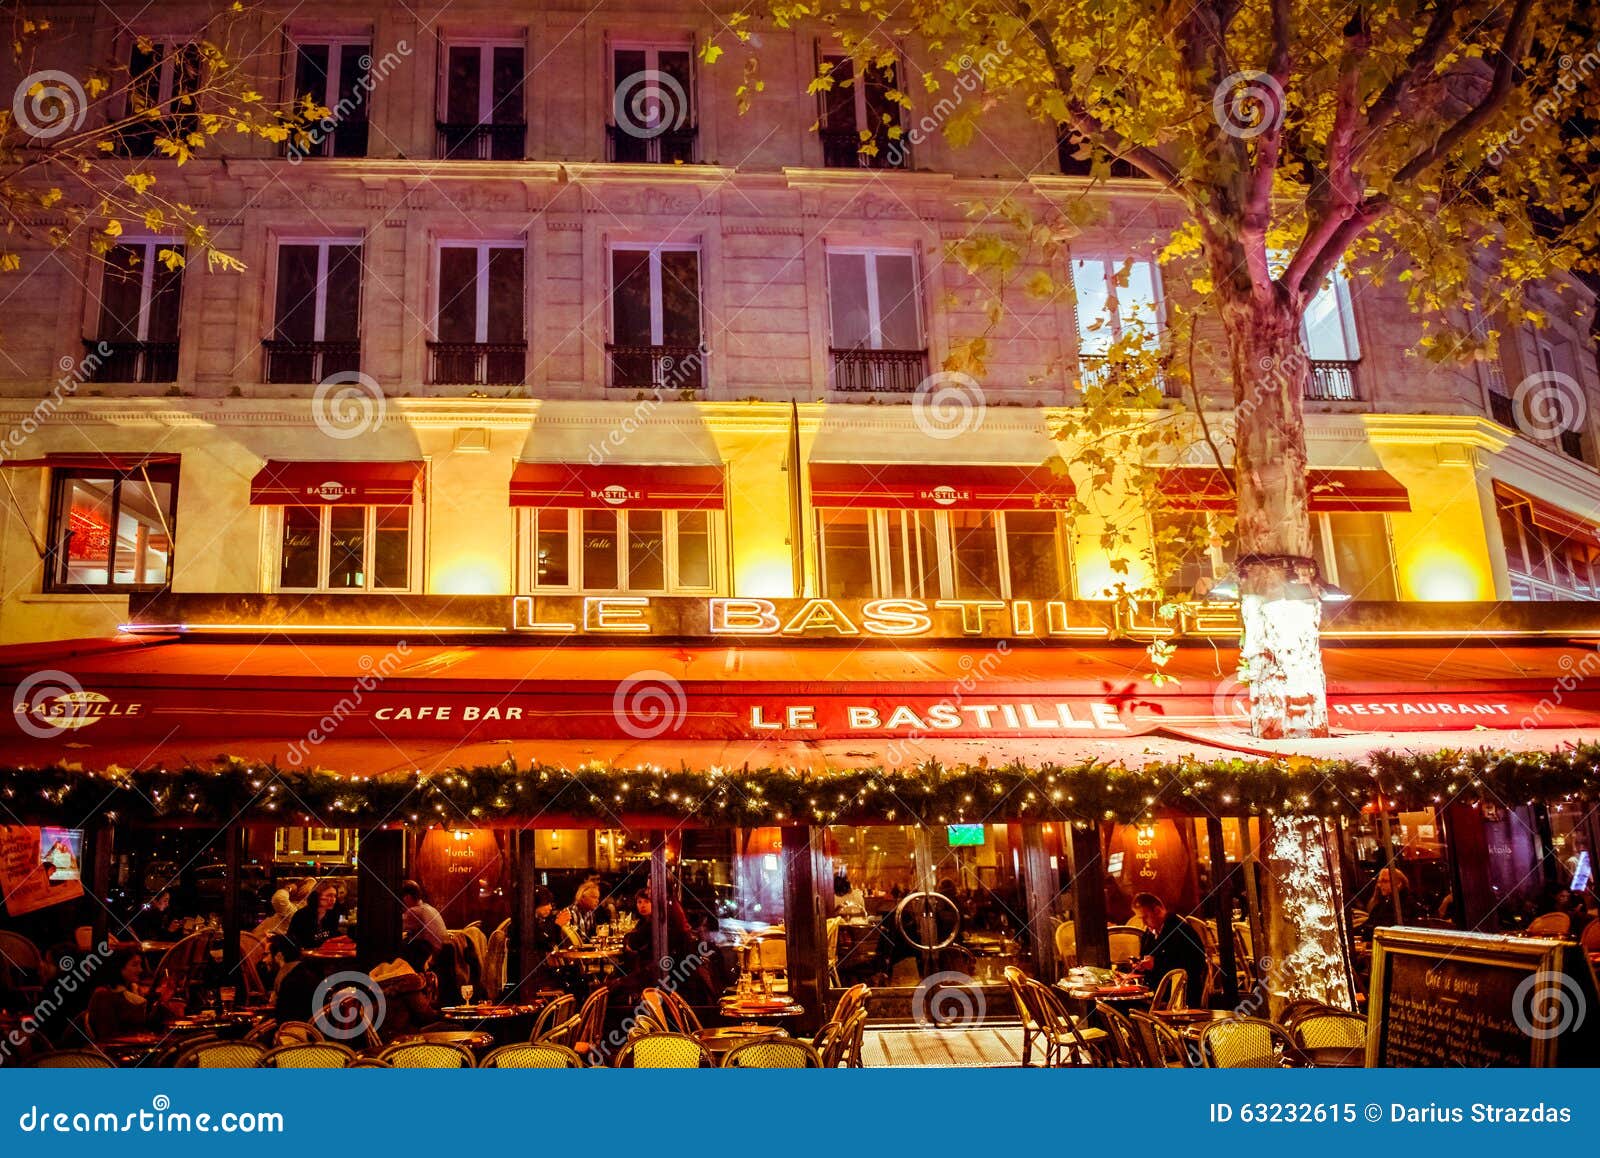 Paris cafe editorial image. Image of table, paris, sightseeing - 63232615